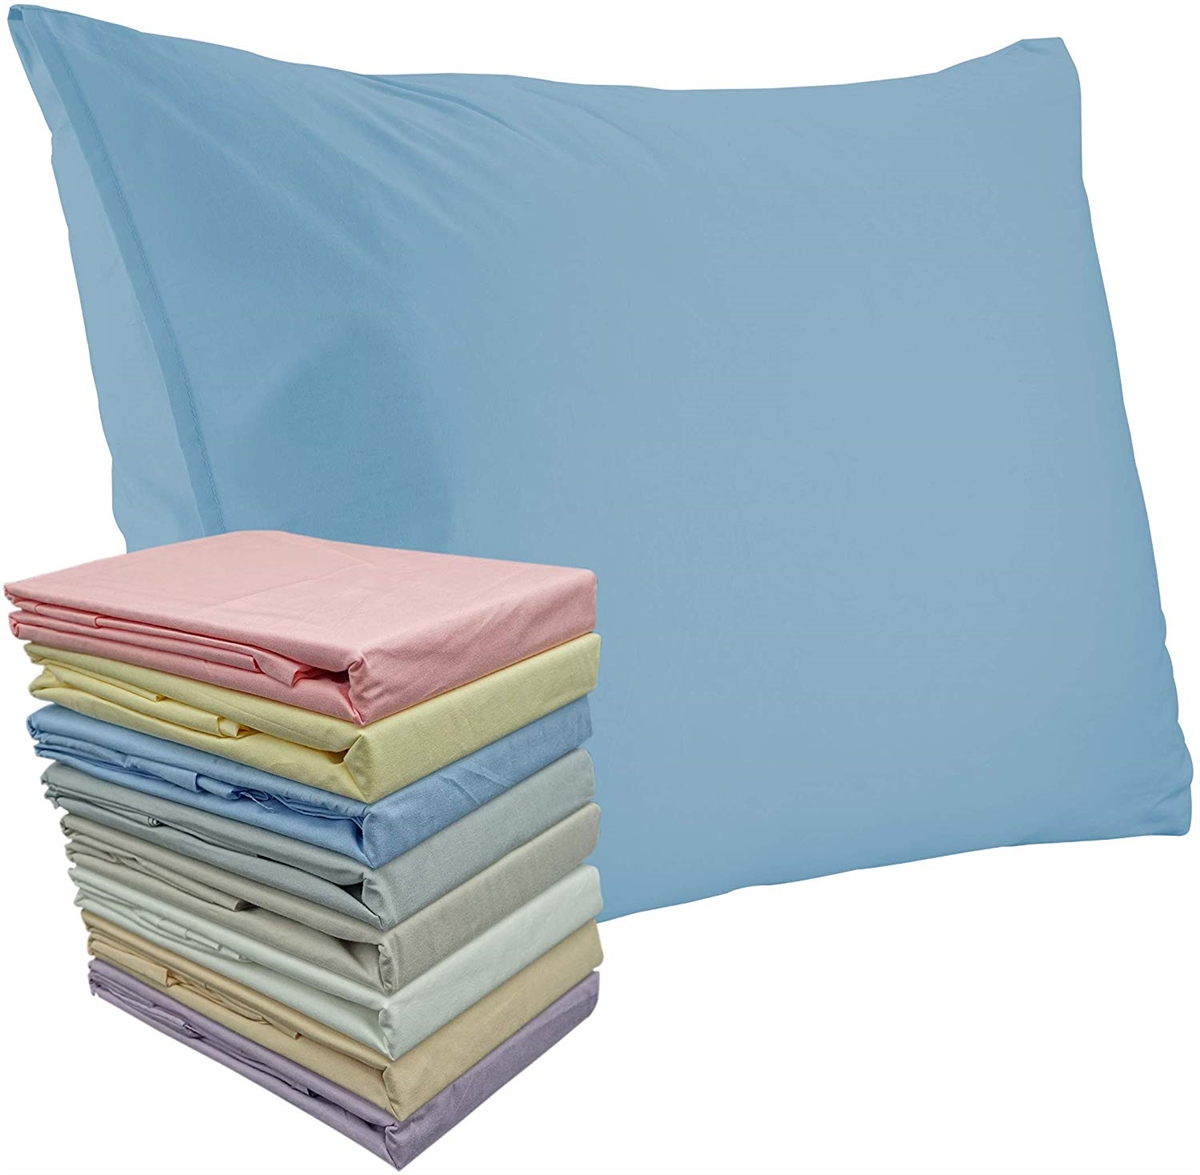 Superior Linen Set of 2 Pillow Cases in Light Blue